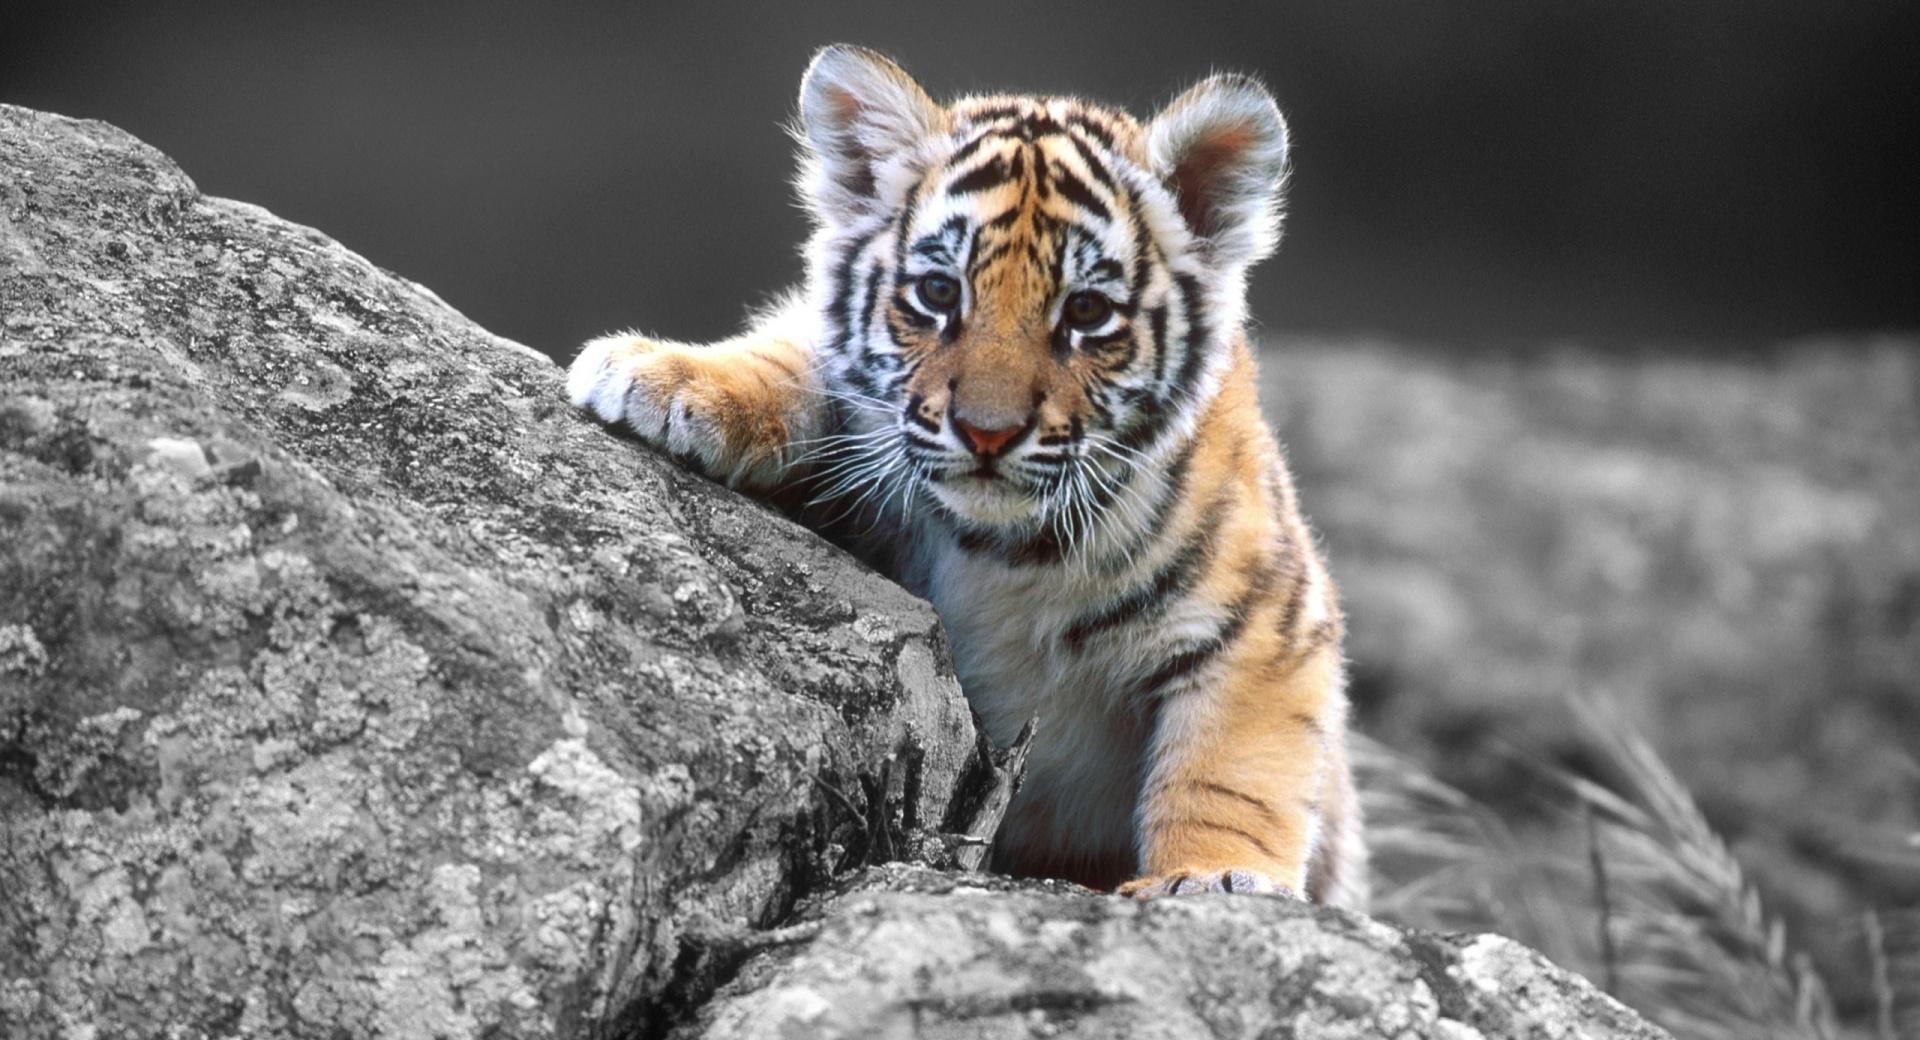 Cute Tiger Cub at 1024 x 1024 iPad size wallpapers HD quality